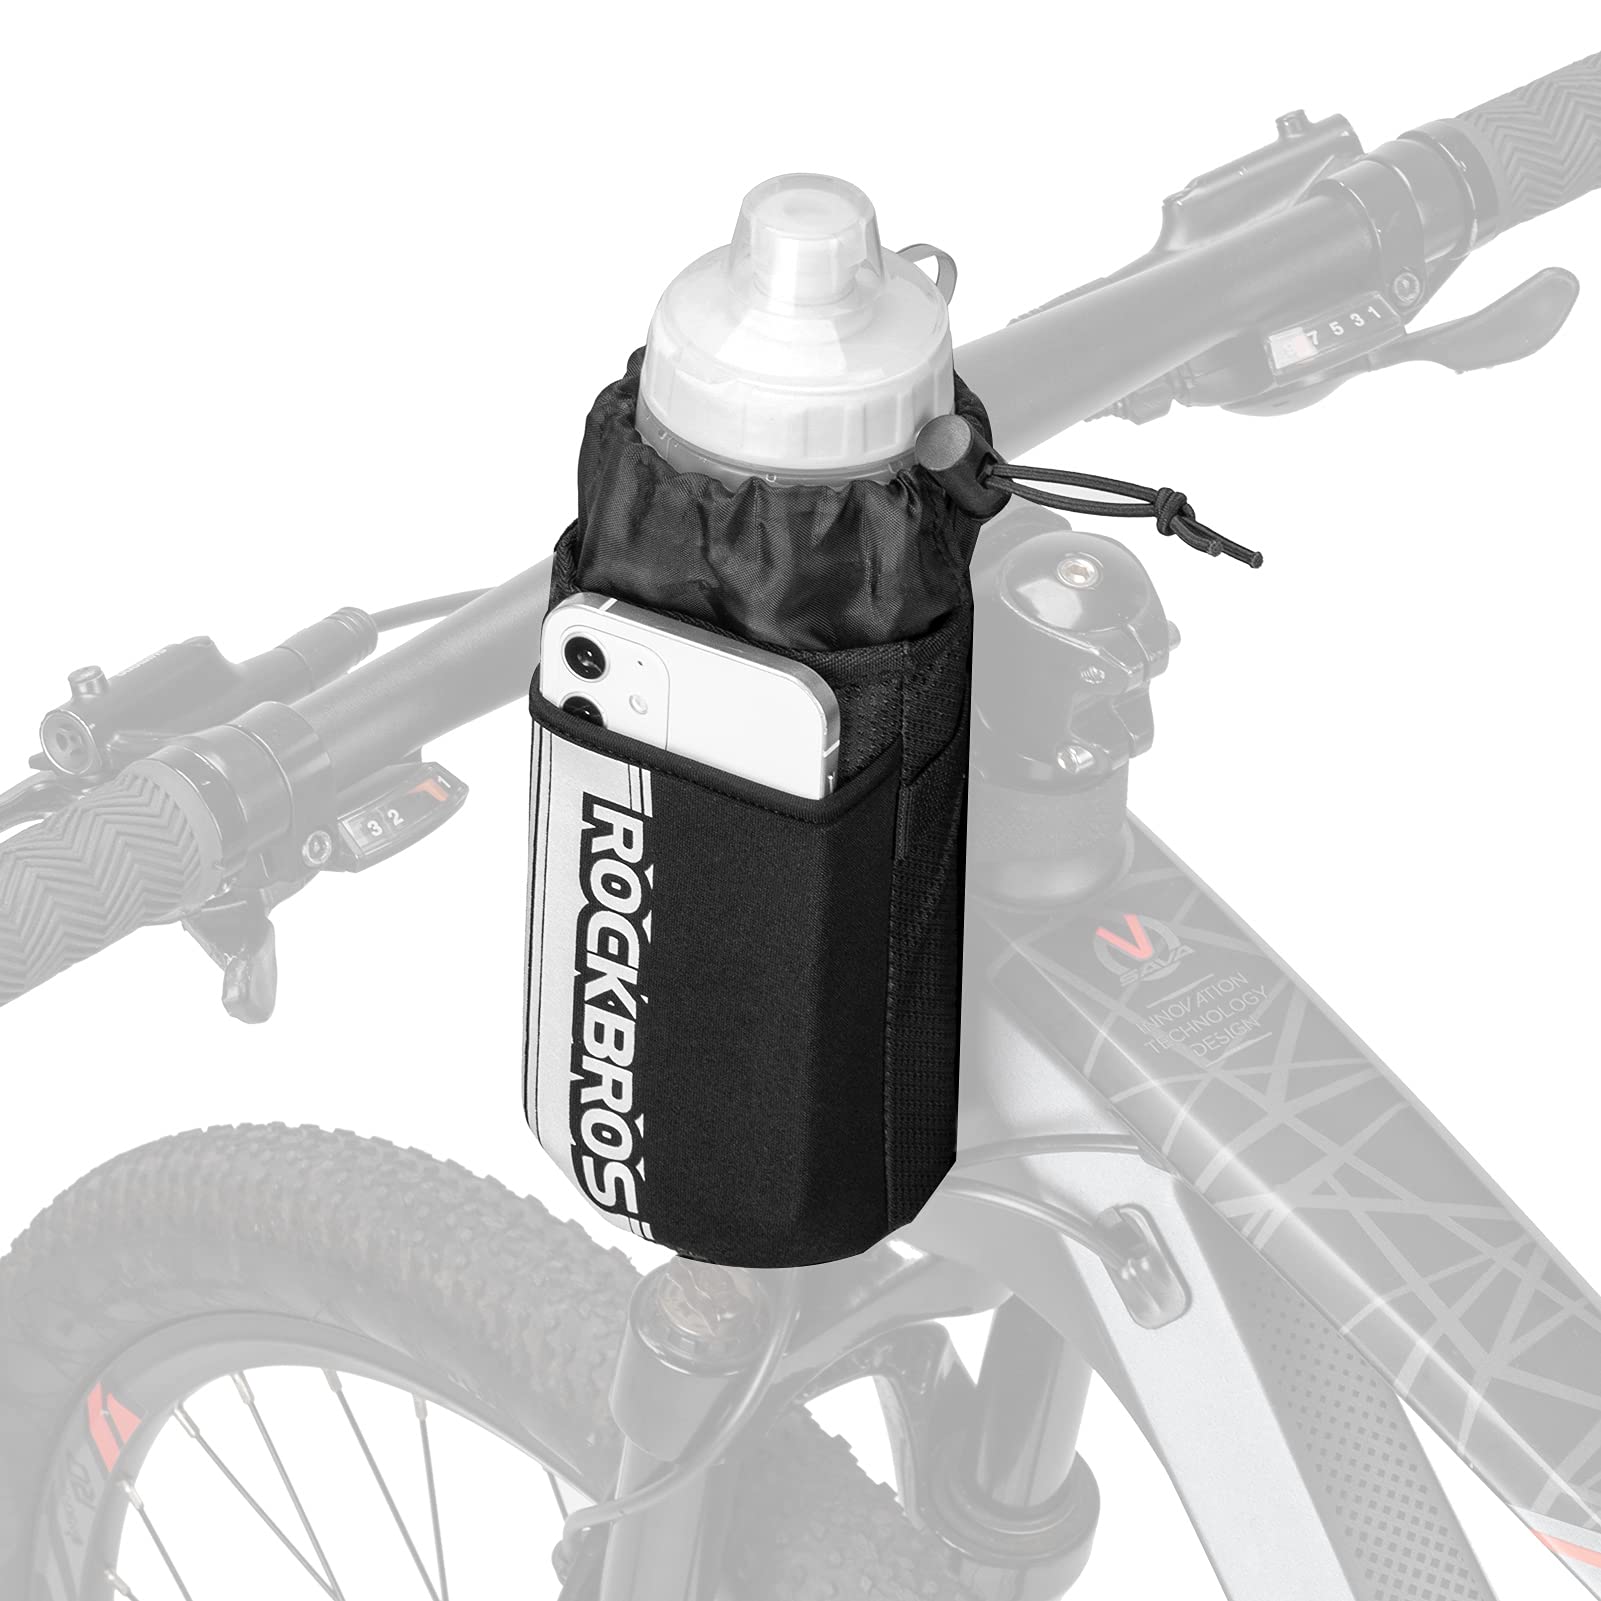 ROCKBROS Insulated Bike Bag with Water Bottle Holder & Mobile Phone Pocket